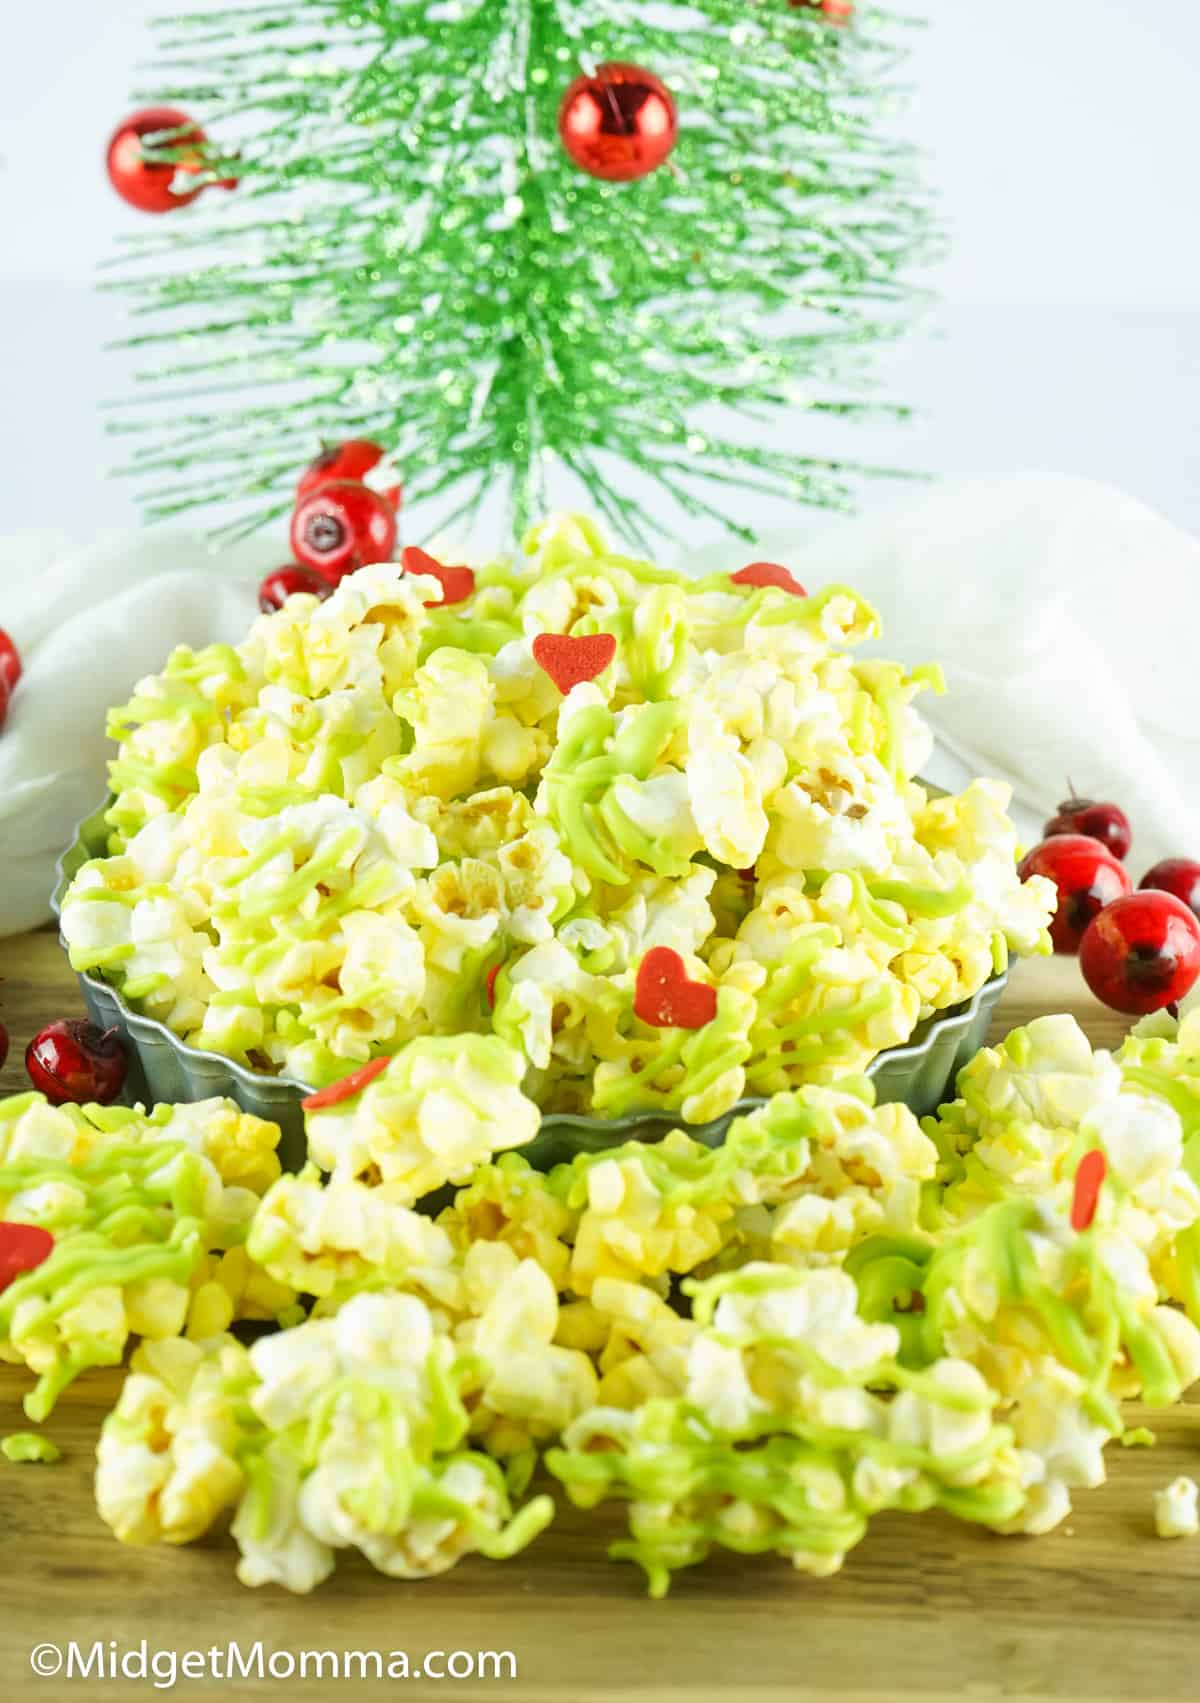 Christmas Movie Night Ideas + Grinch Popcorn Recipe! – That